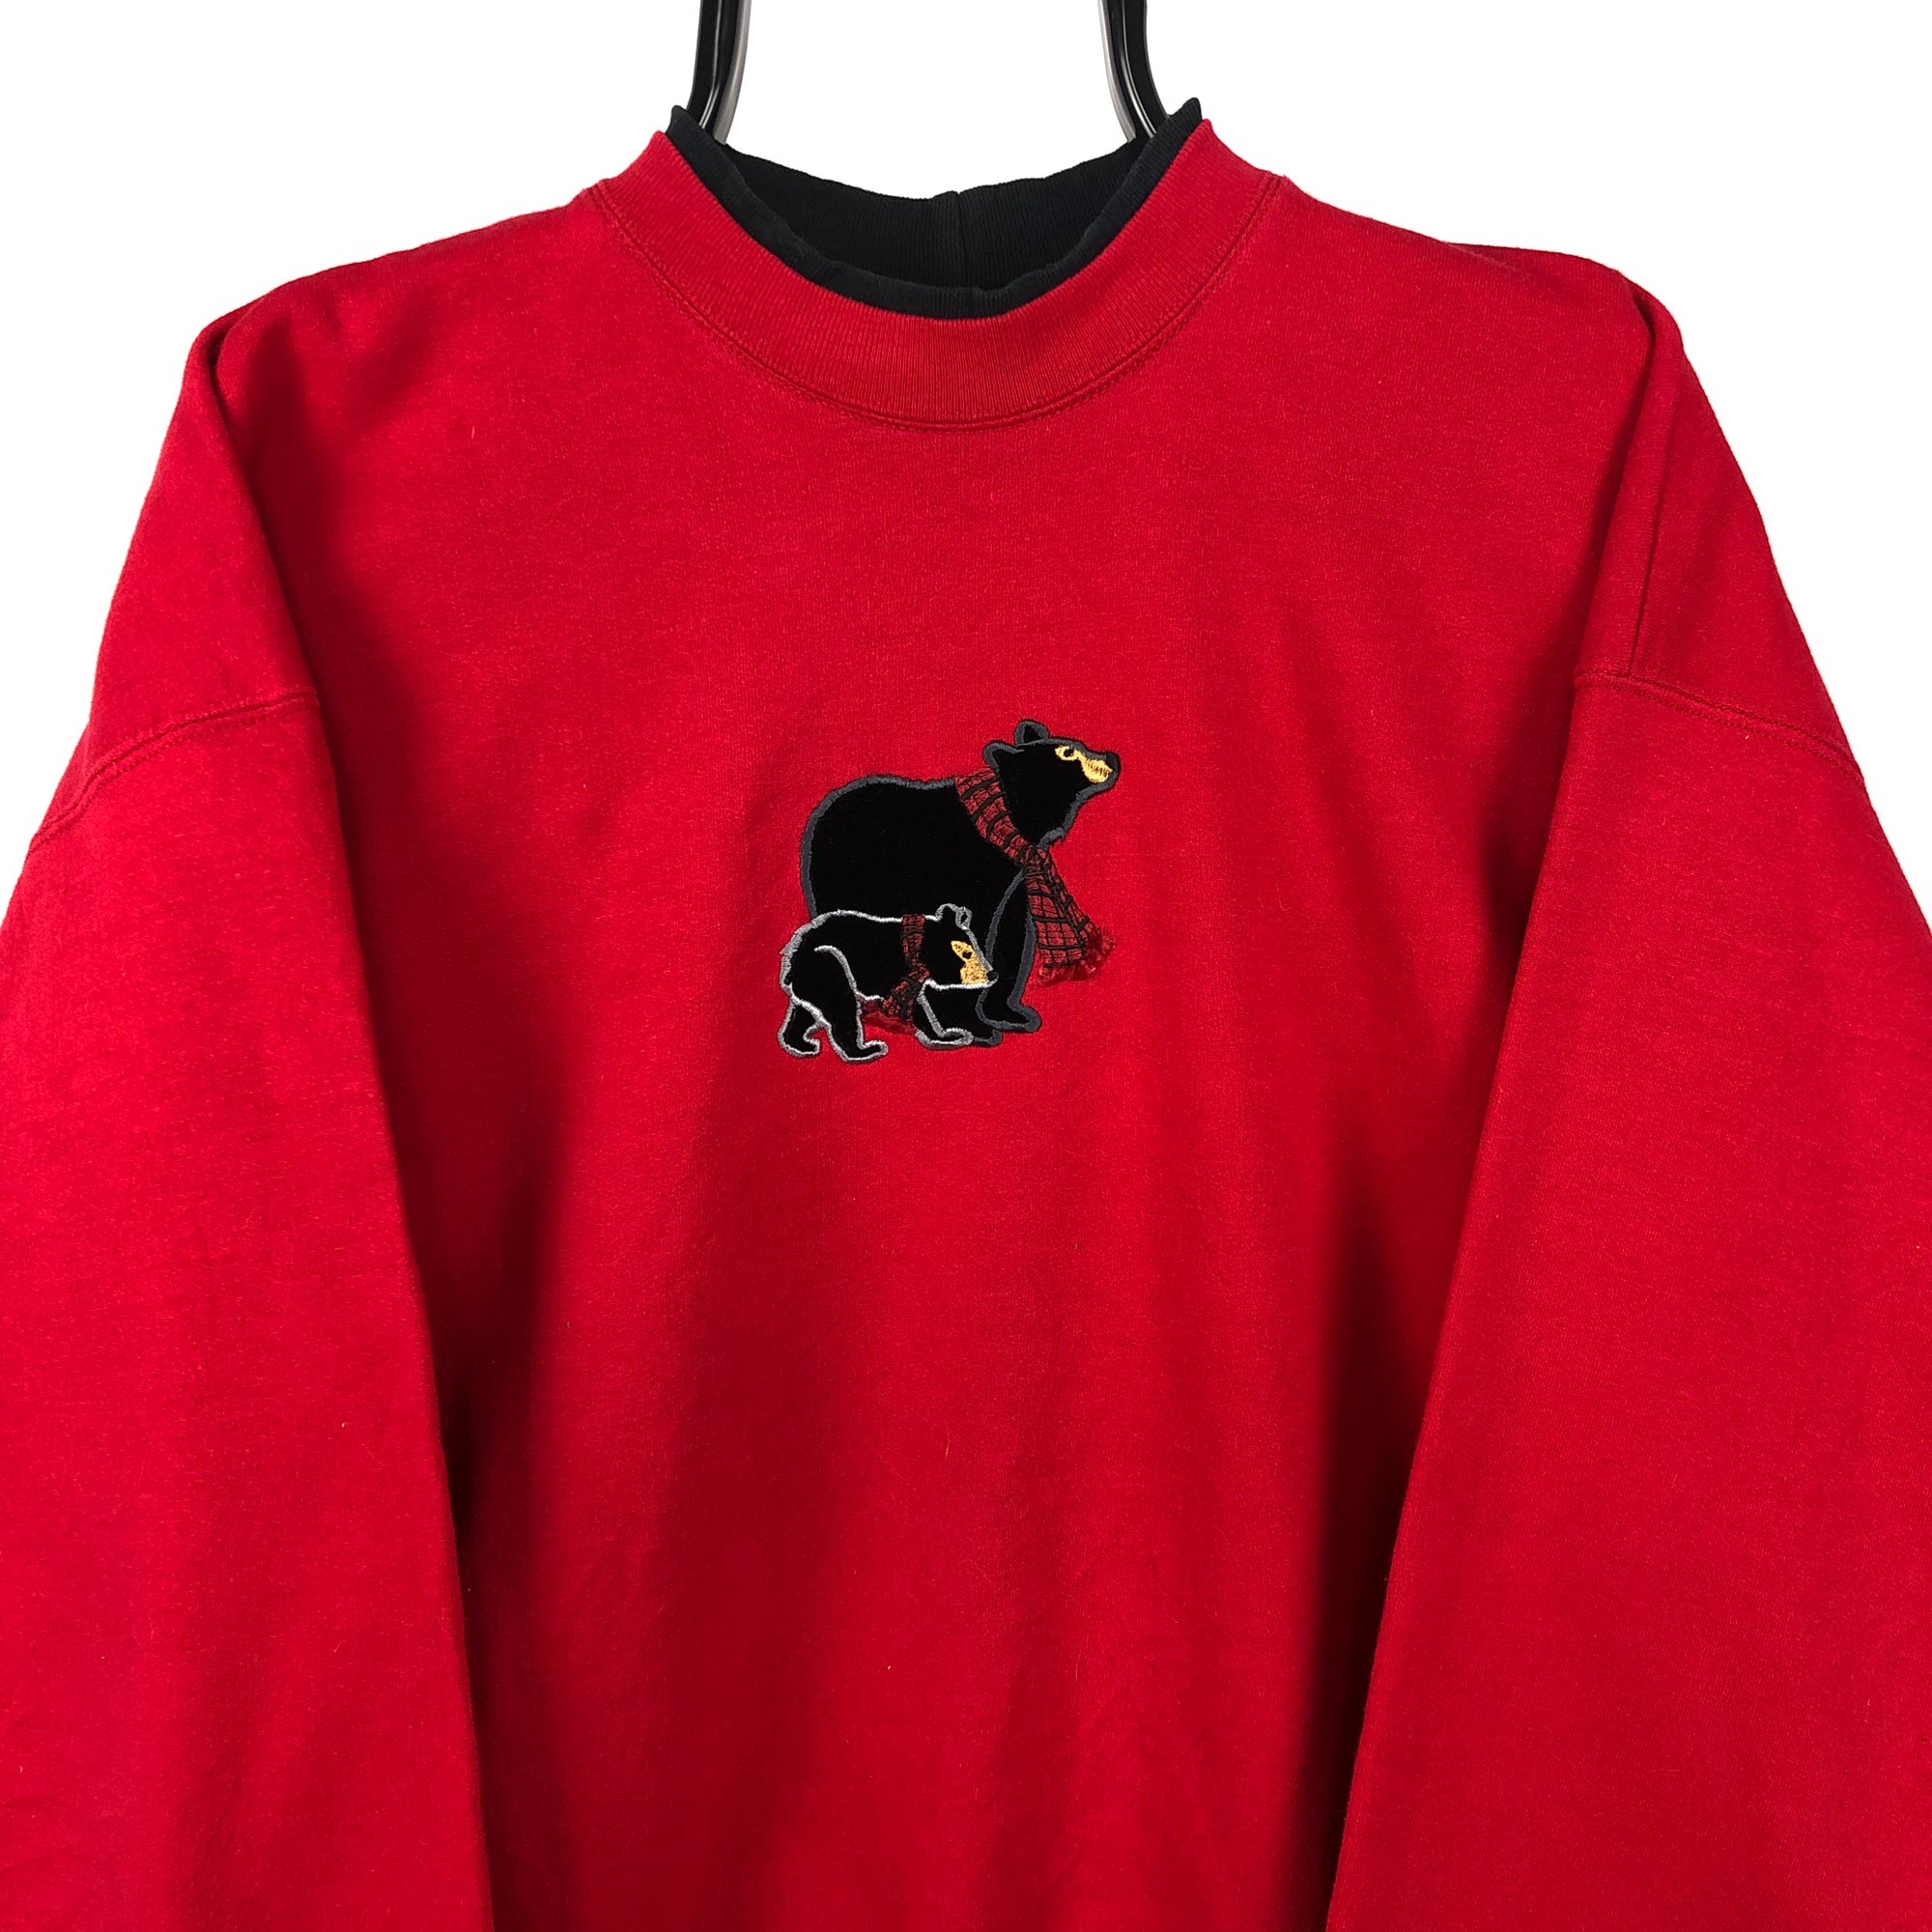 Vintage 90s Bear Embroidery Sweatshirt in Red - Men's Medium/Women's Large